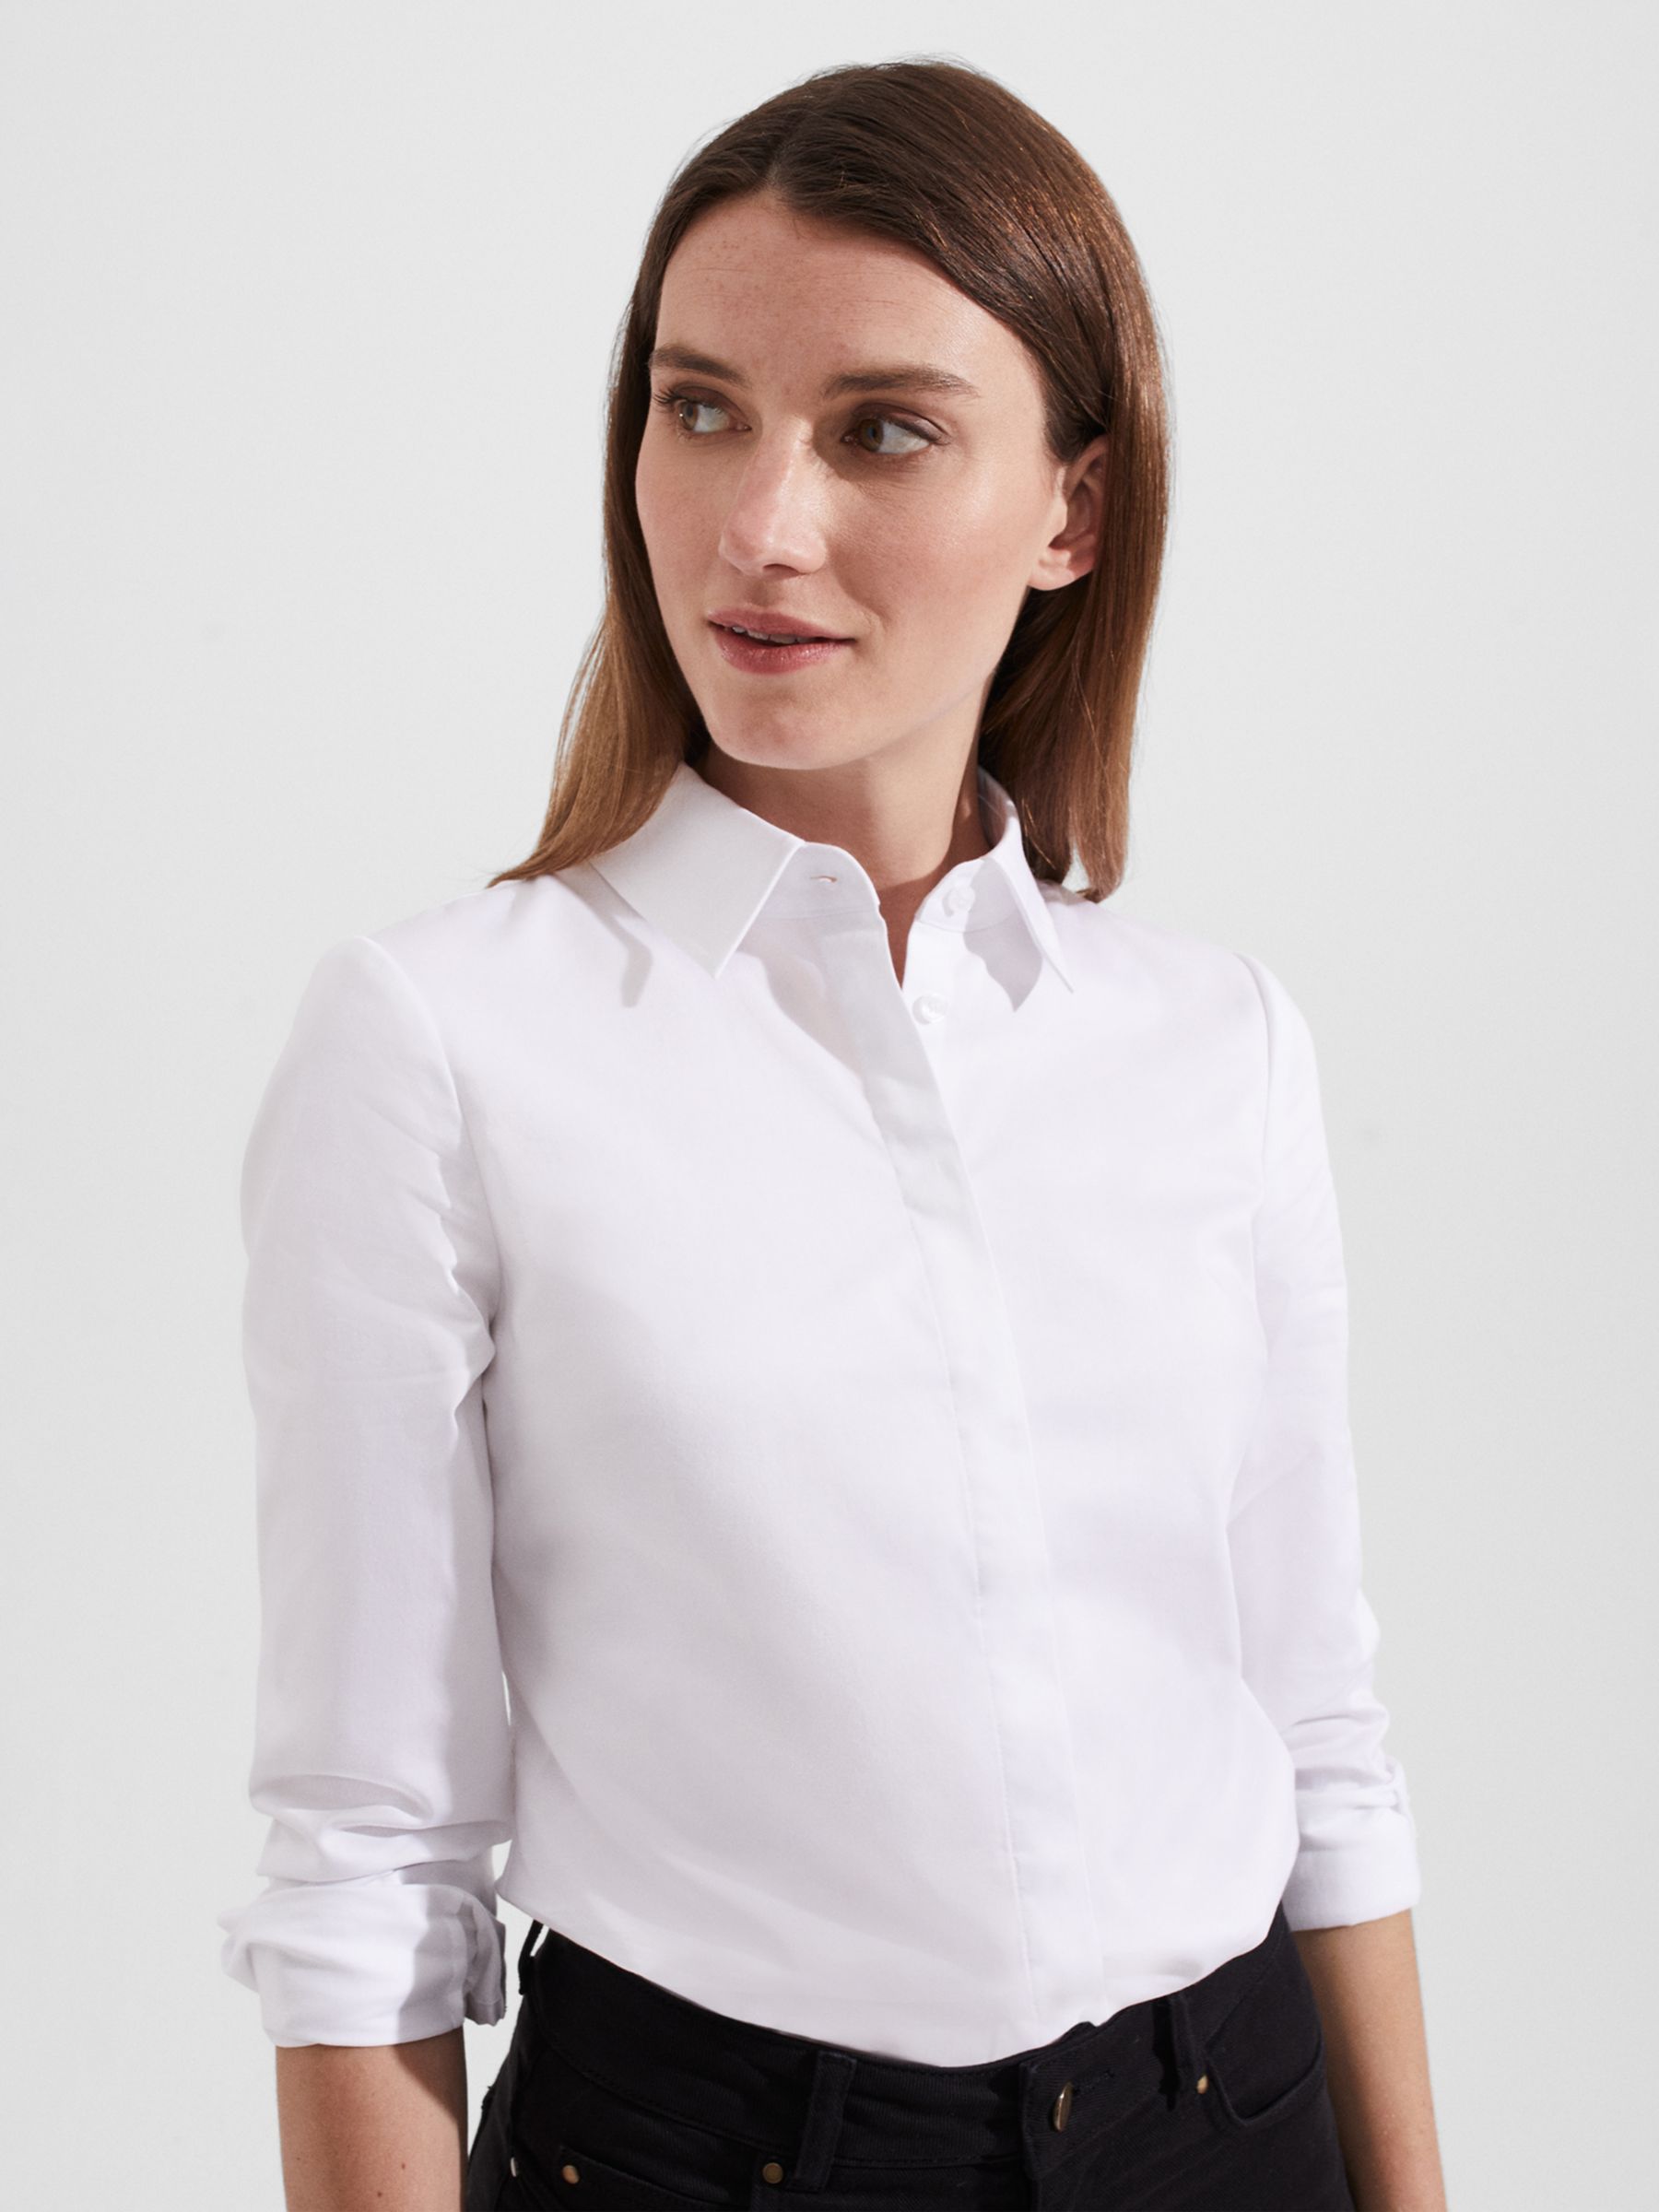 Hobbs Victoria Shirt, White at John Lewis & Partners